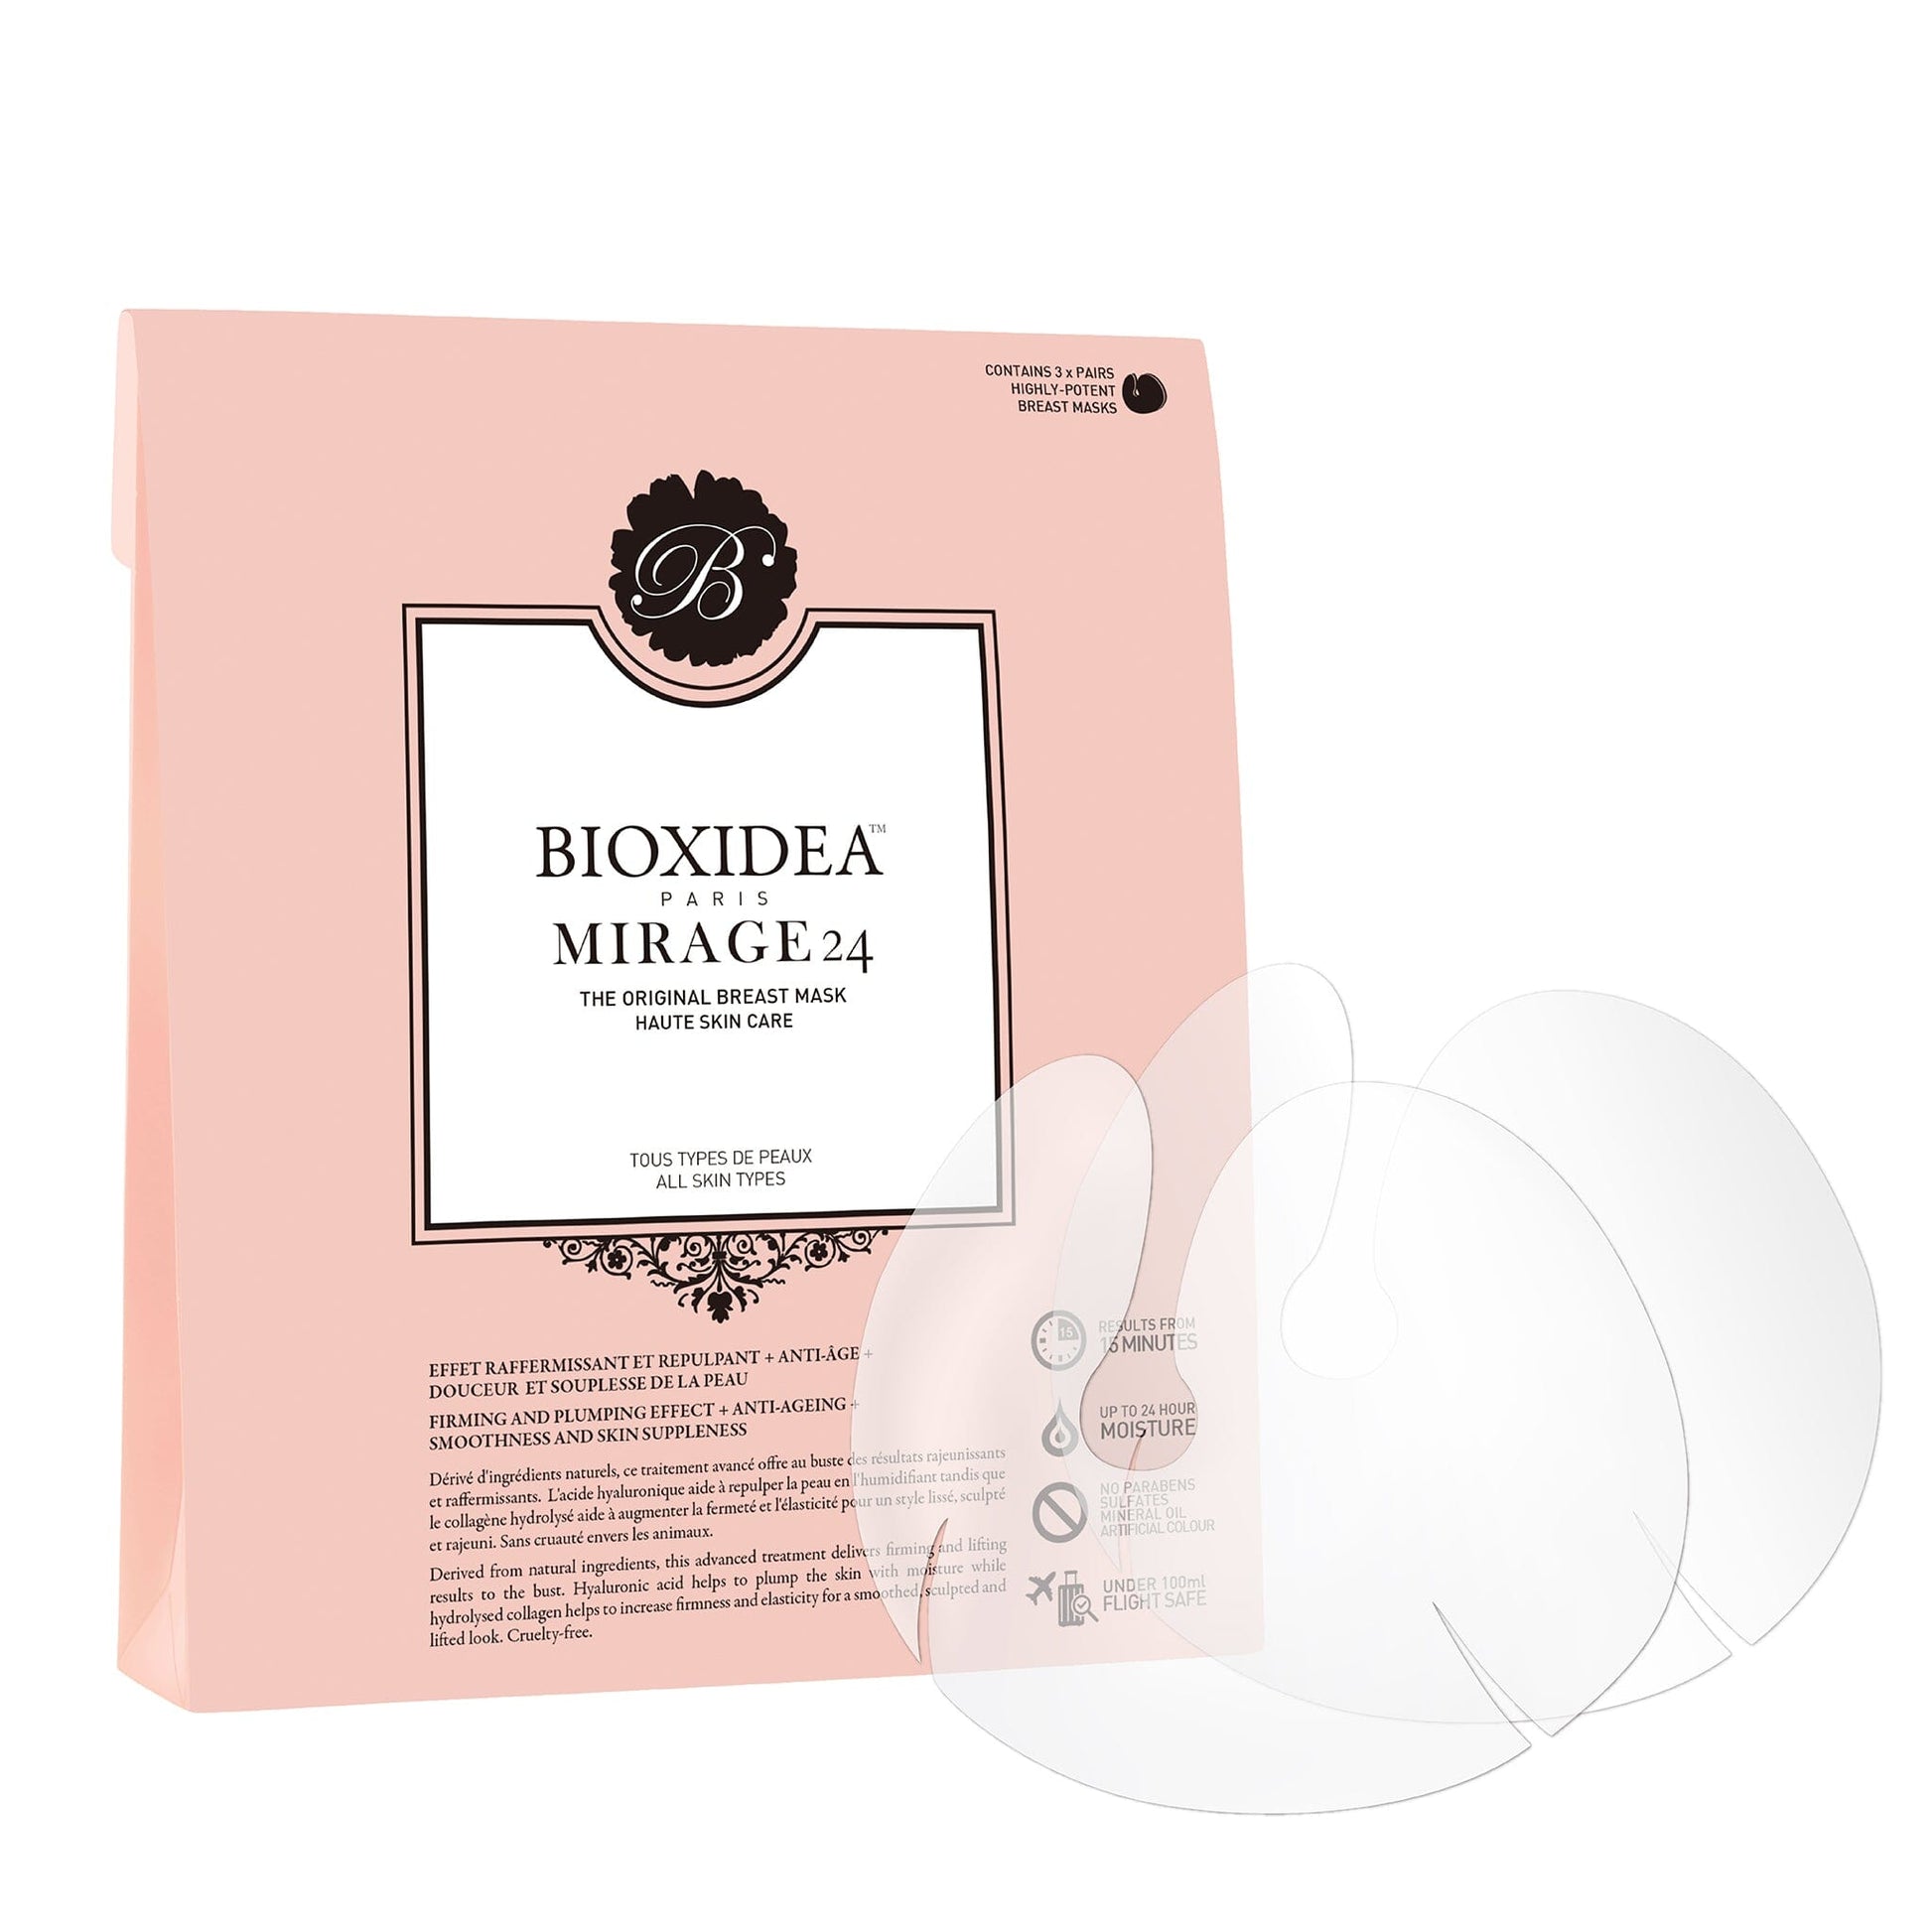 BIOXIDEA Mirage24 Breast Mask Mask 